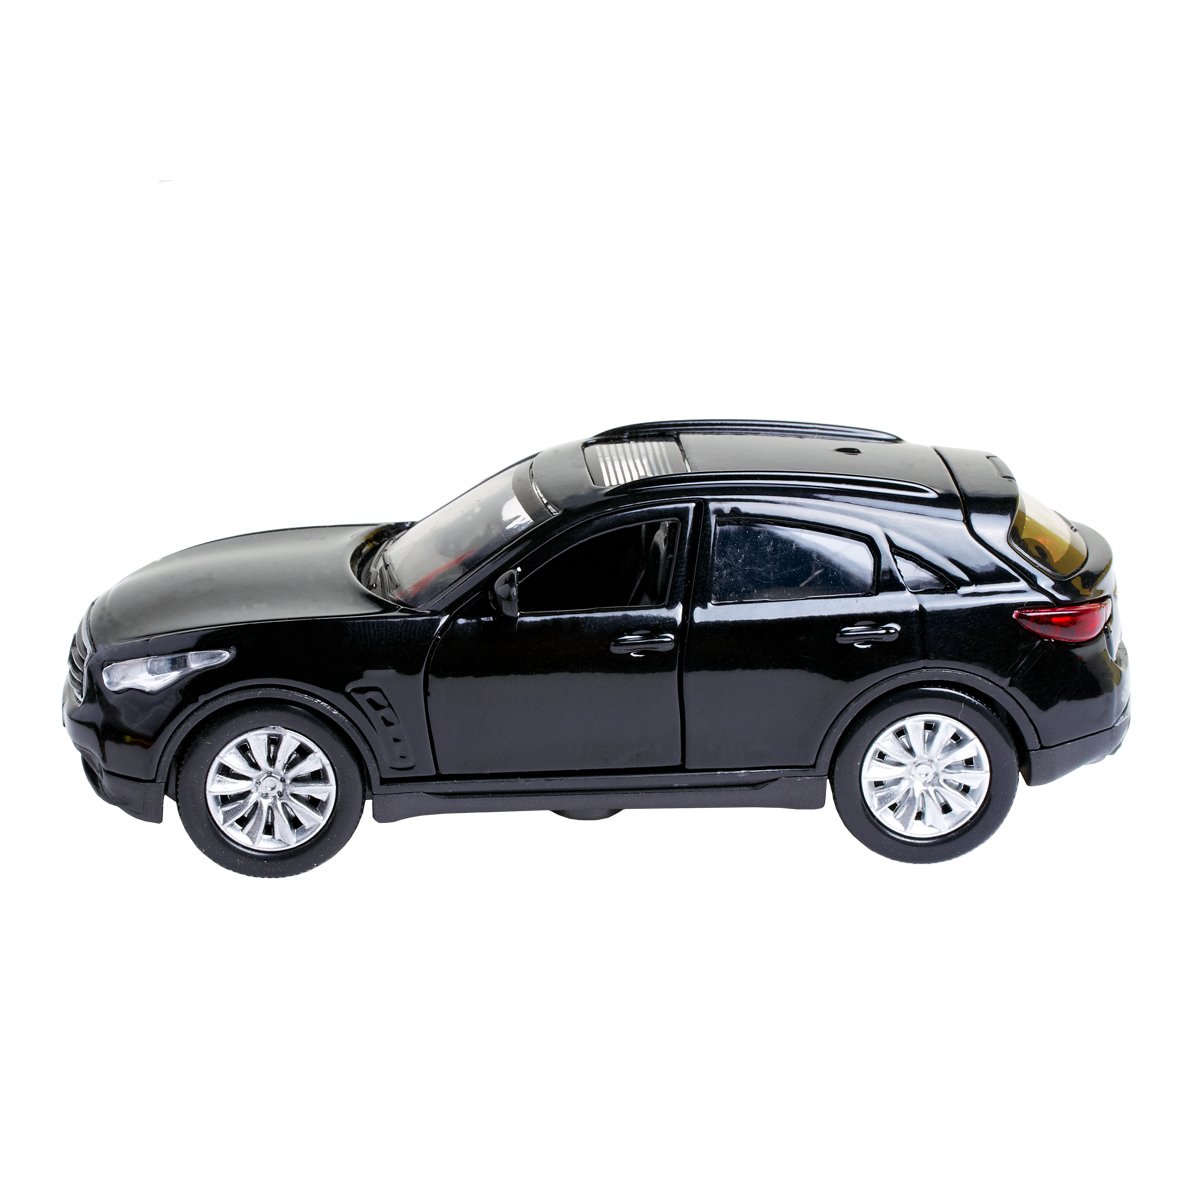 Автомодель Технопарк Infiniti QX70, 1:32, черный (QX70-BK) - фото 4